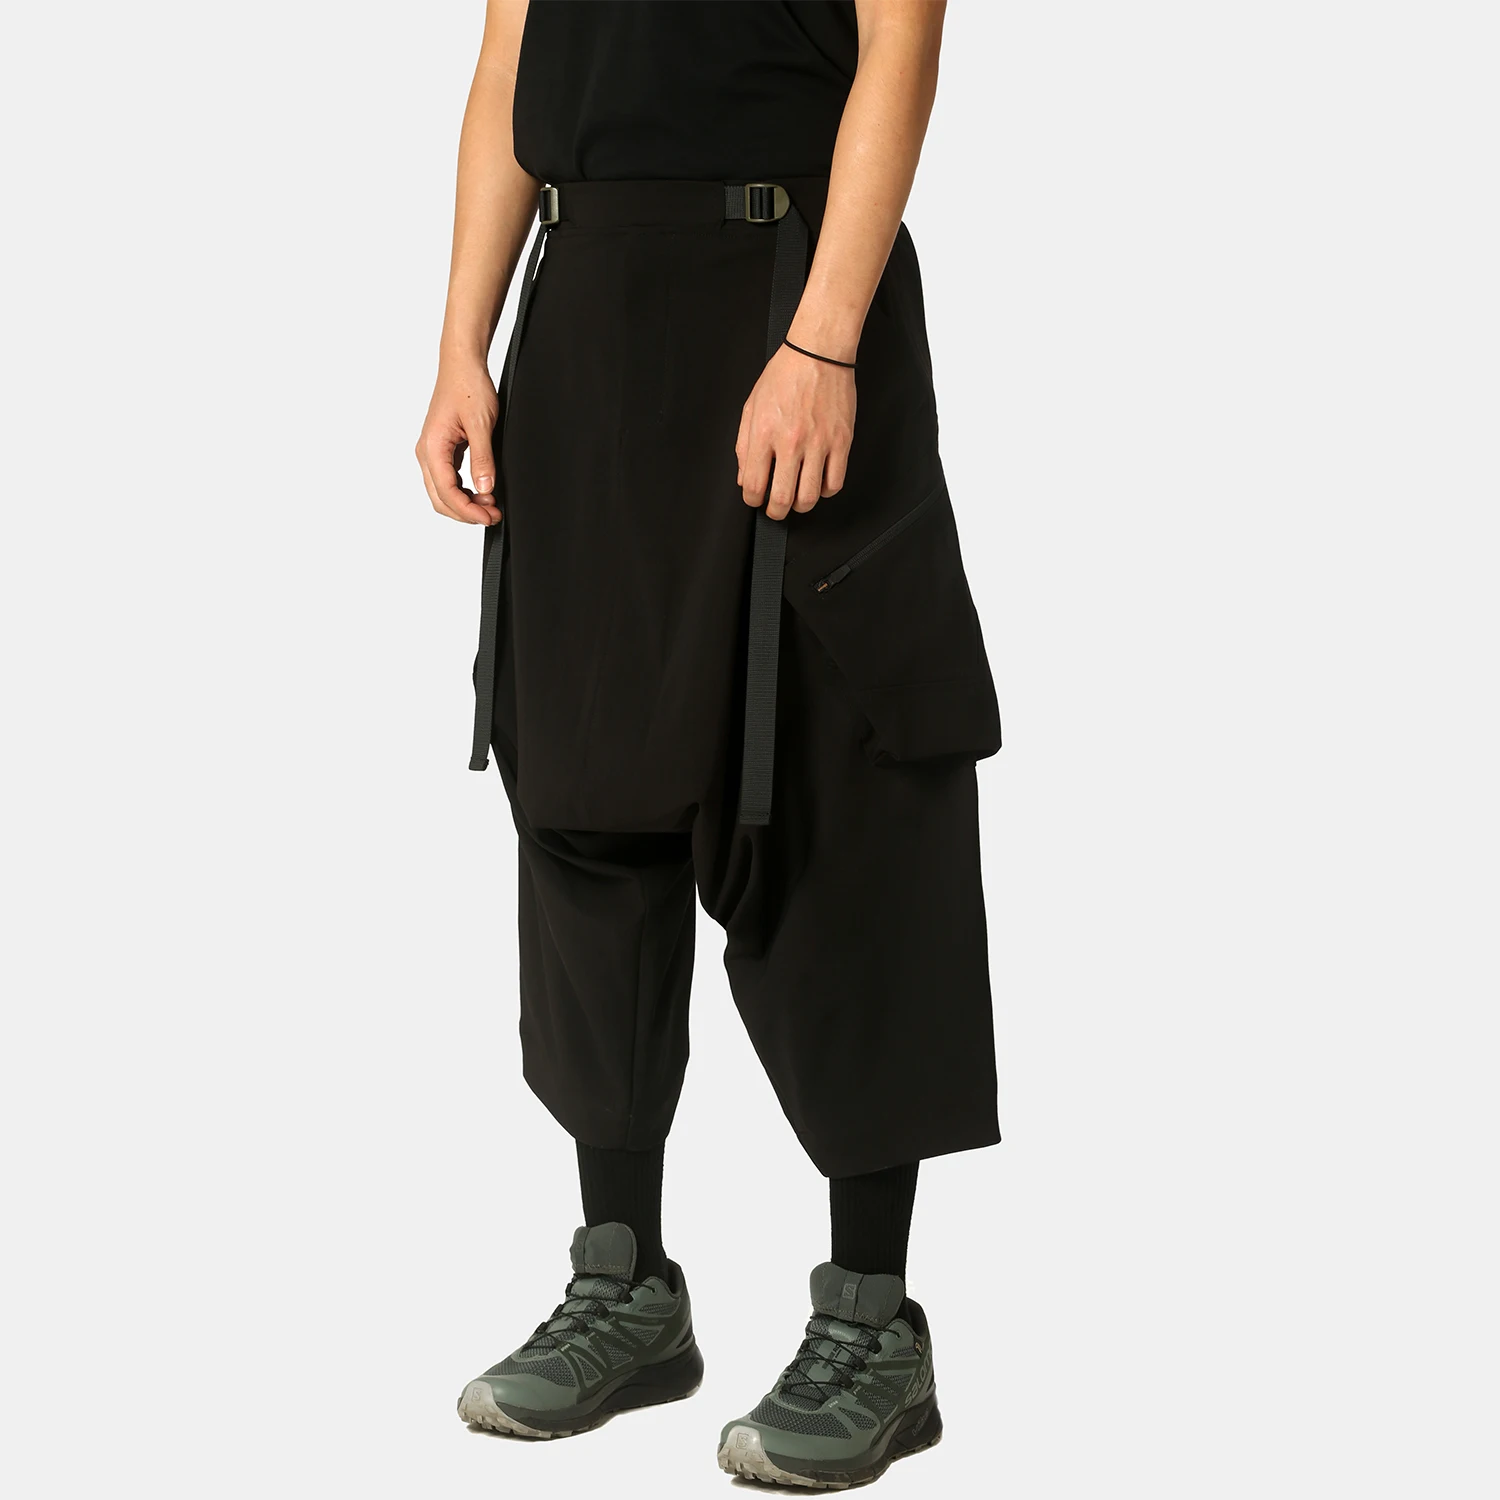 NOSUCISM 19SS cyberpunk cropped pants fashion ninja style techwear Samurai pant dark wear wide leg trousers Wasteland Punk